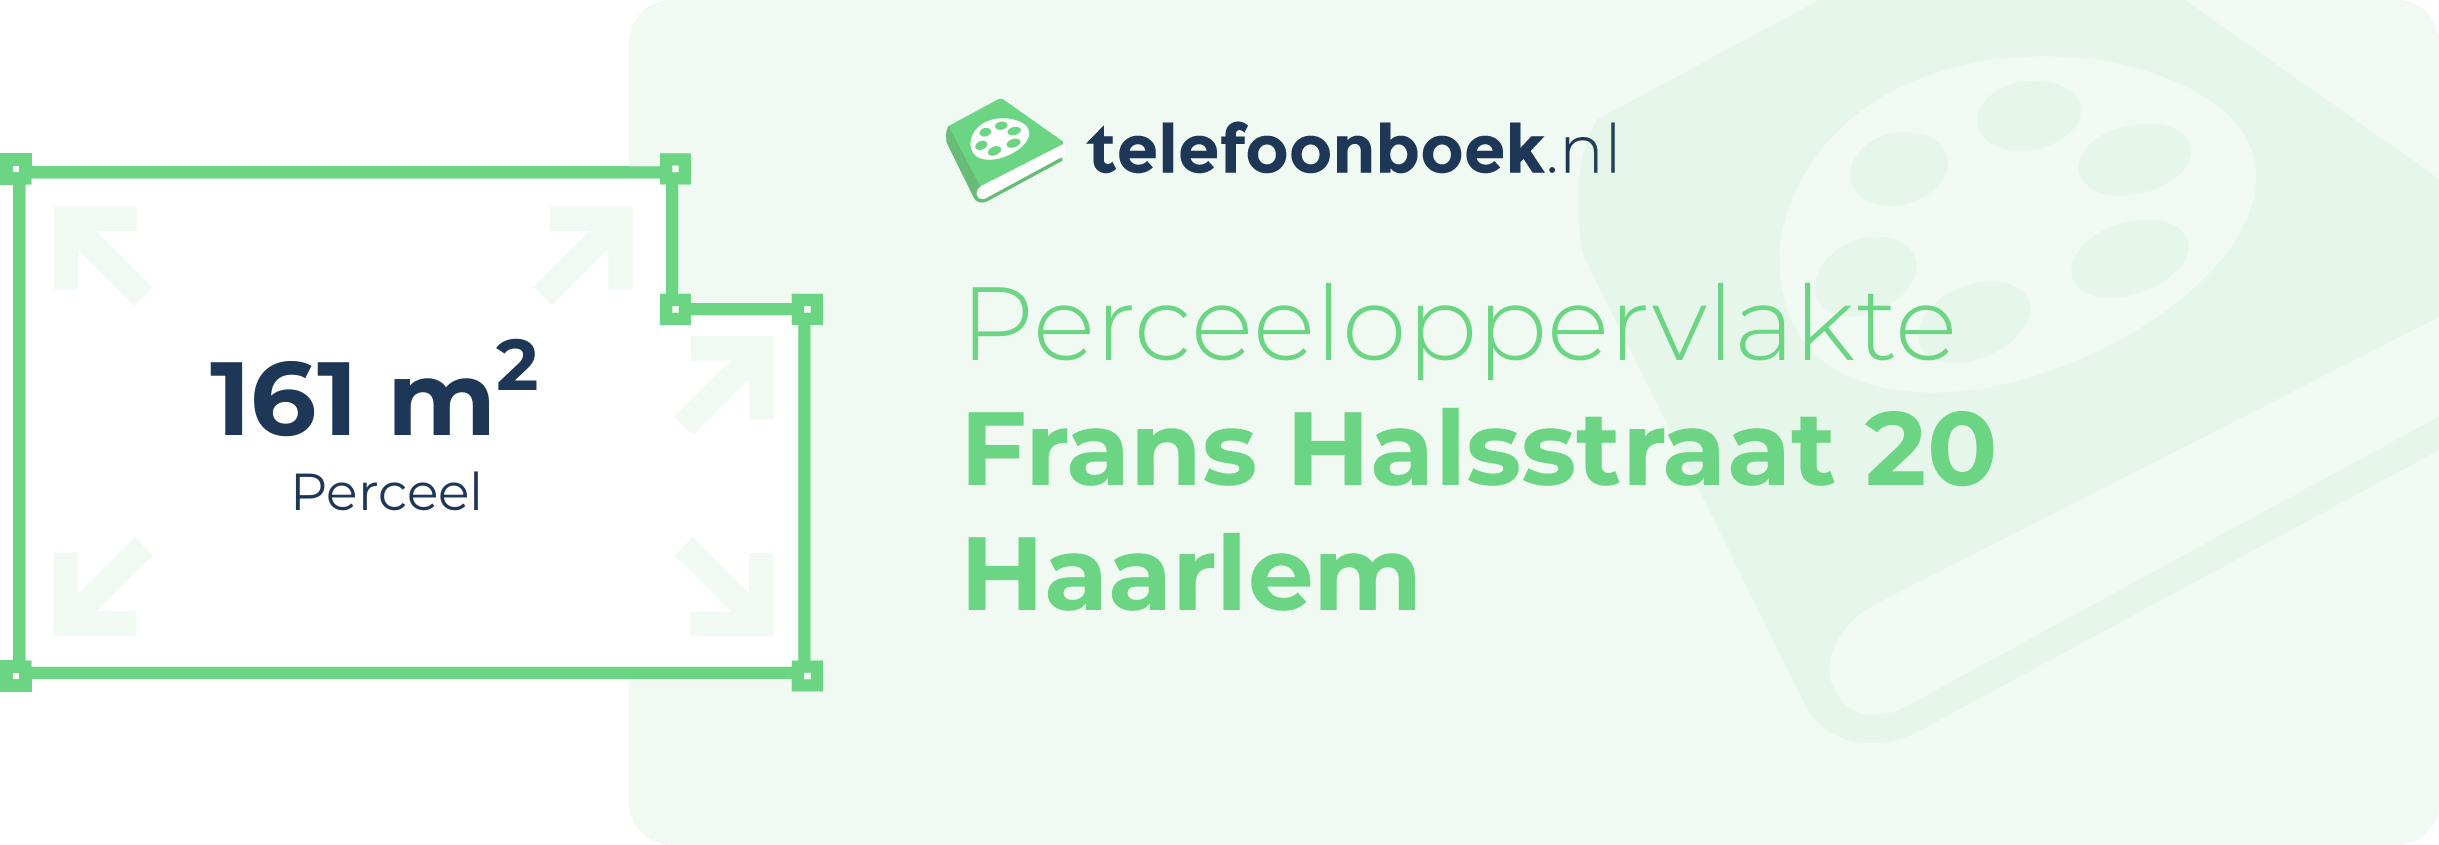 Perceeloppervlakte Frans Halsstraat 20 Haarlem